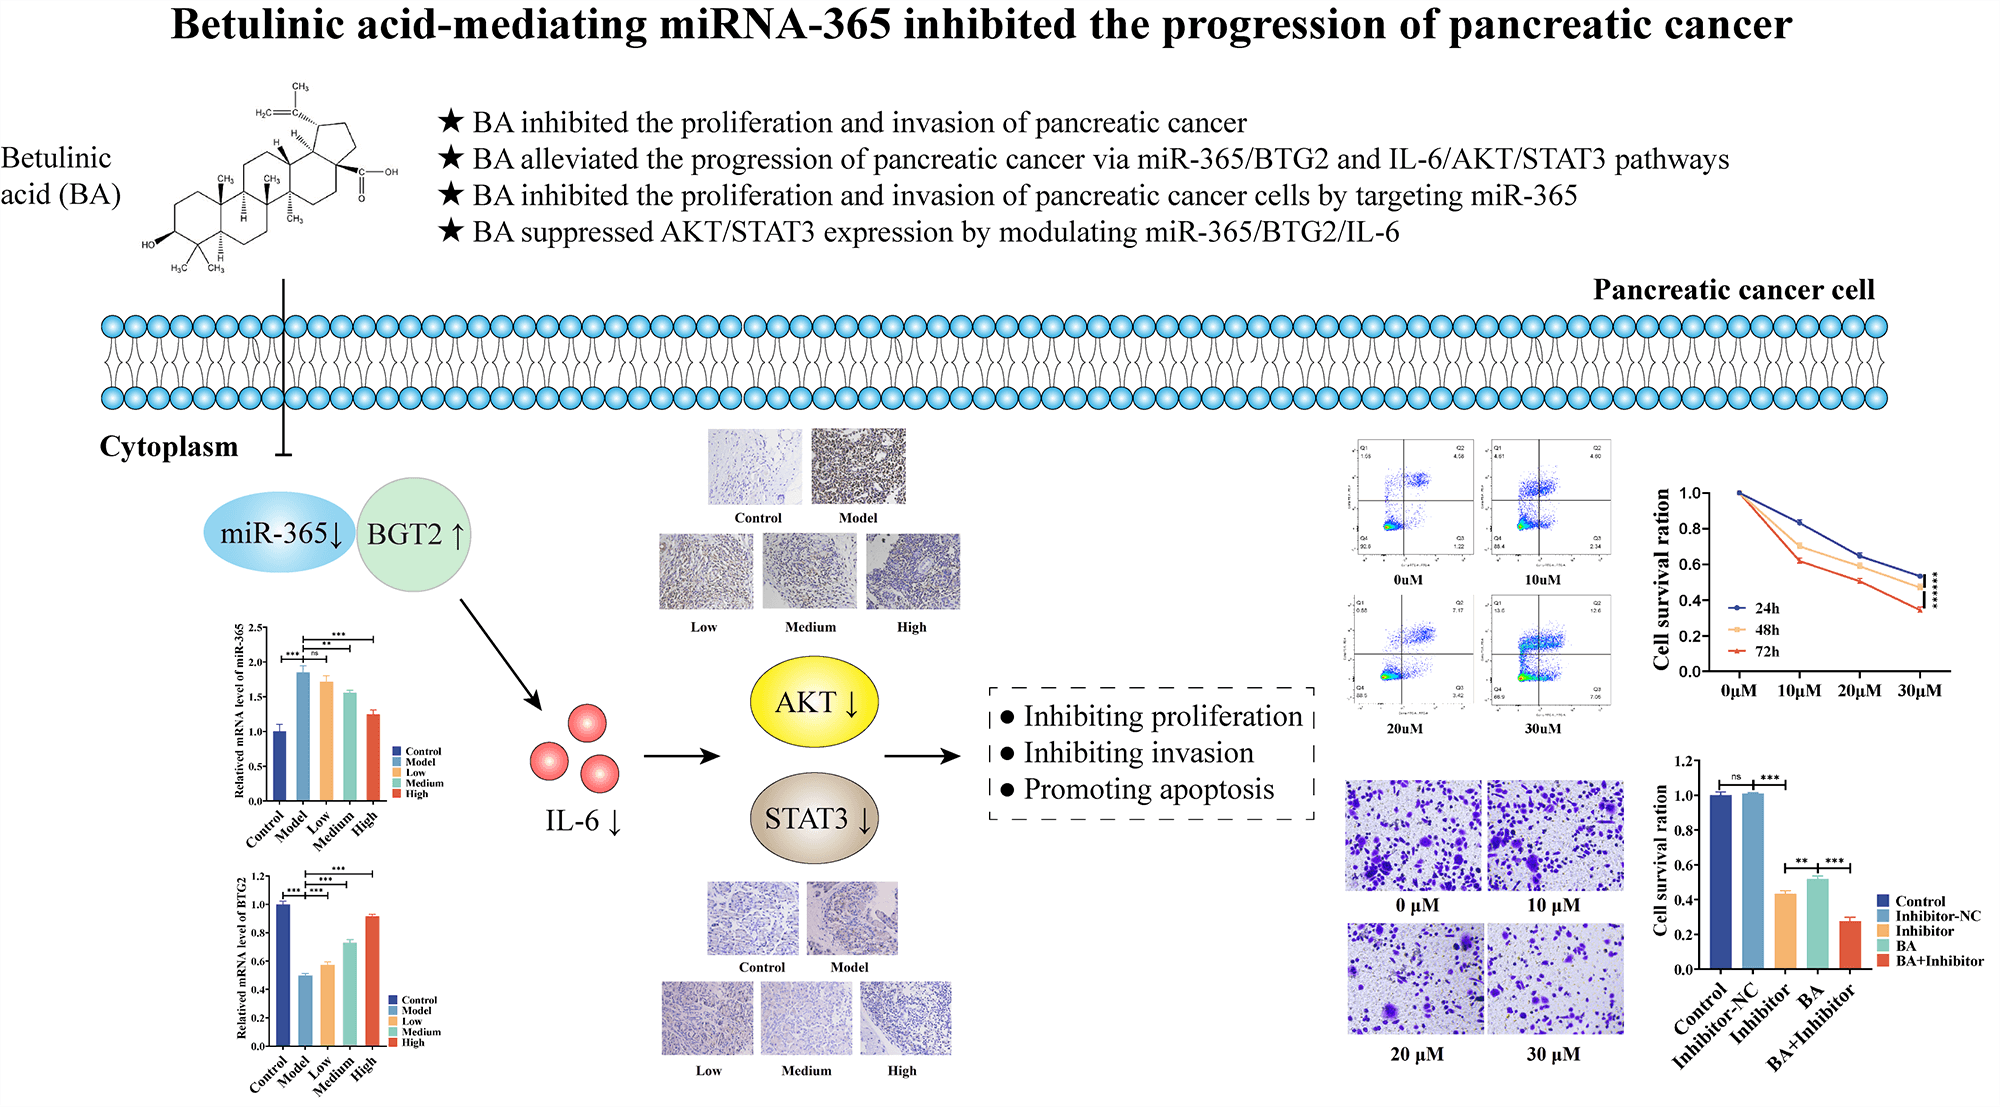 Betulinic acid-mediating miRNA-365 inhibited the progression of pancreatic cancer